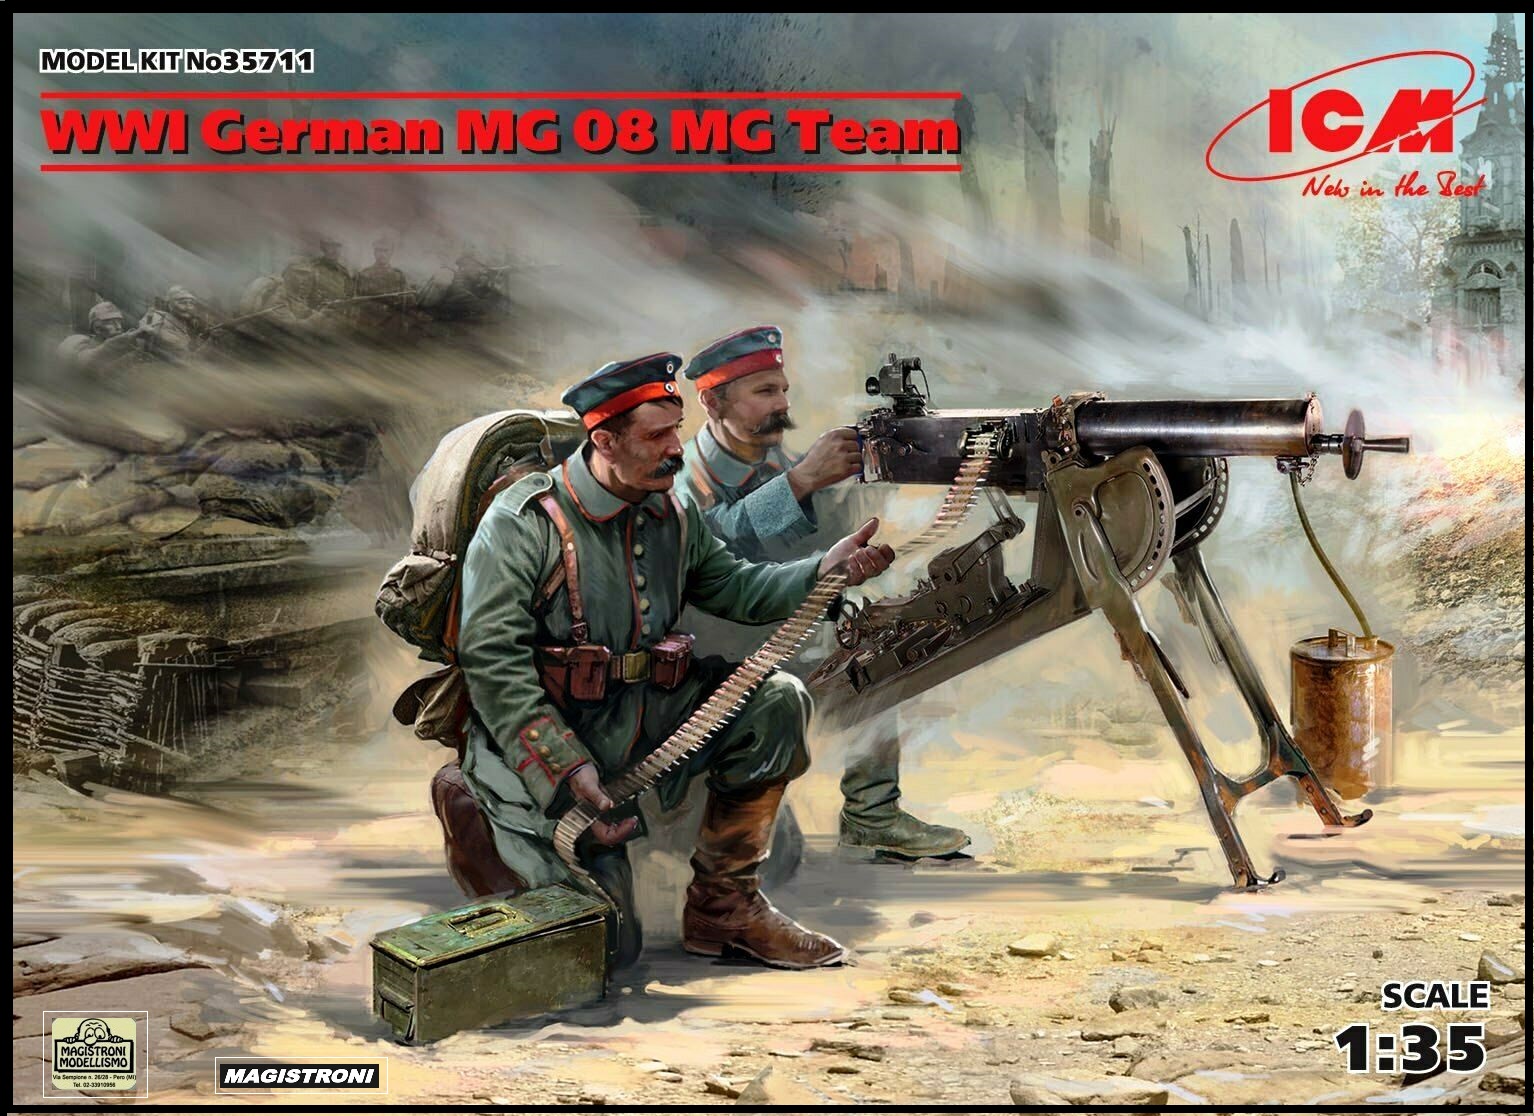 WWI GERMAN MG08 MG TEAM